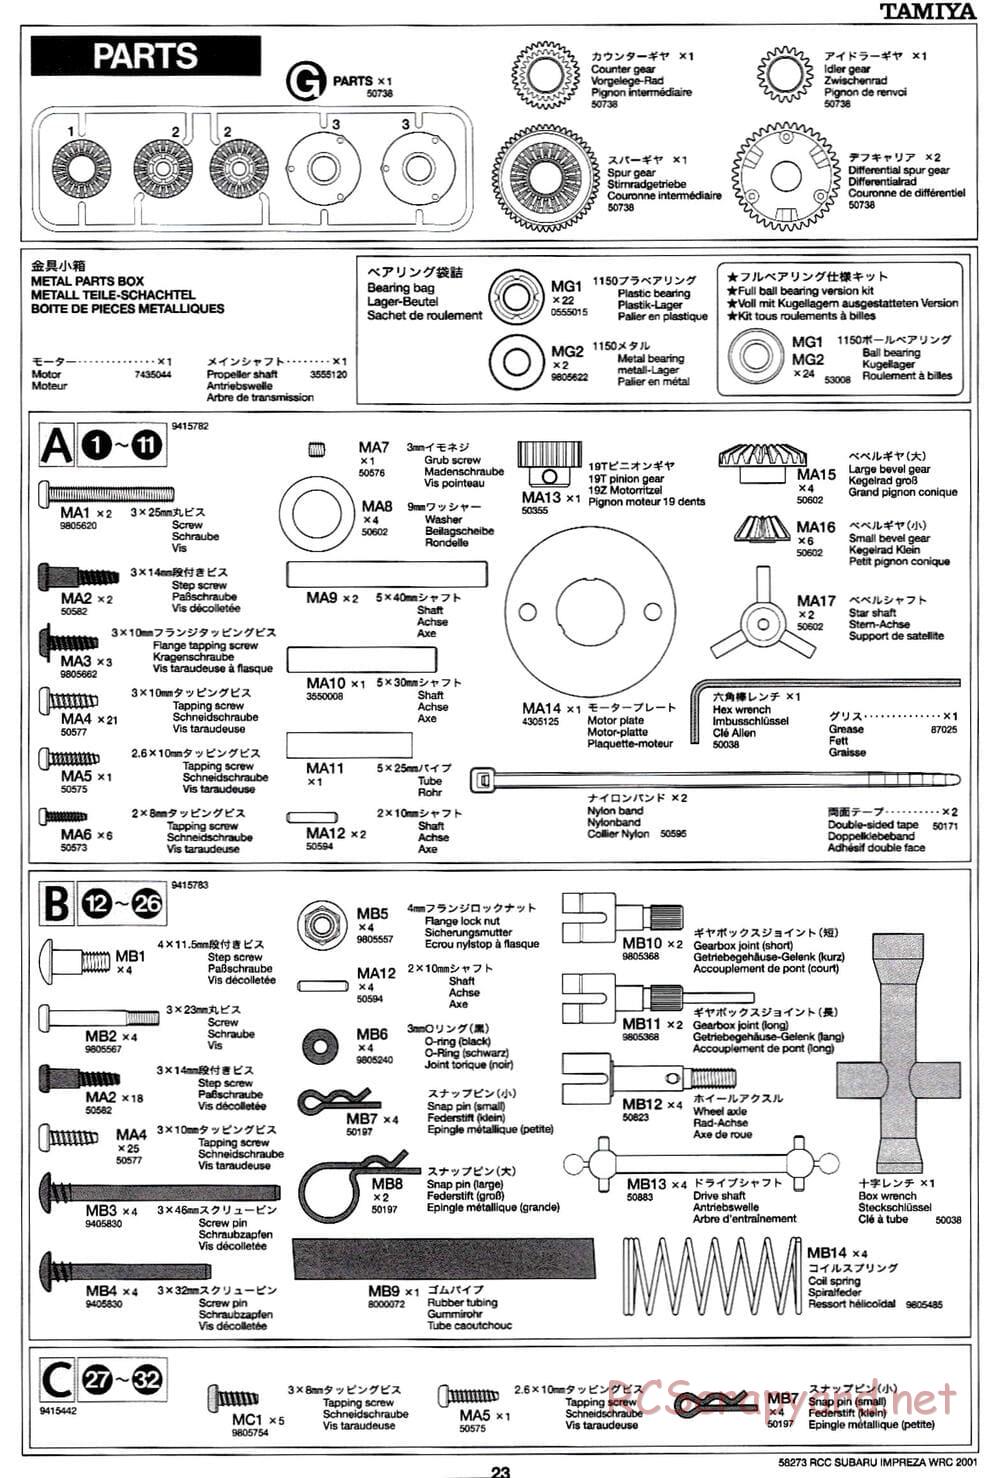 Tamiya - Subaru Impreza WRC 2001 - TL-01 Chassis - Manual - Page 23